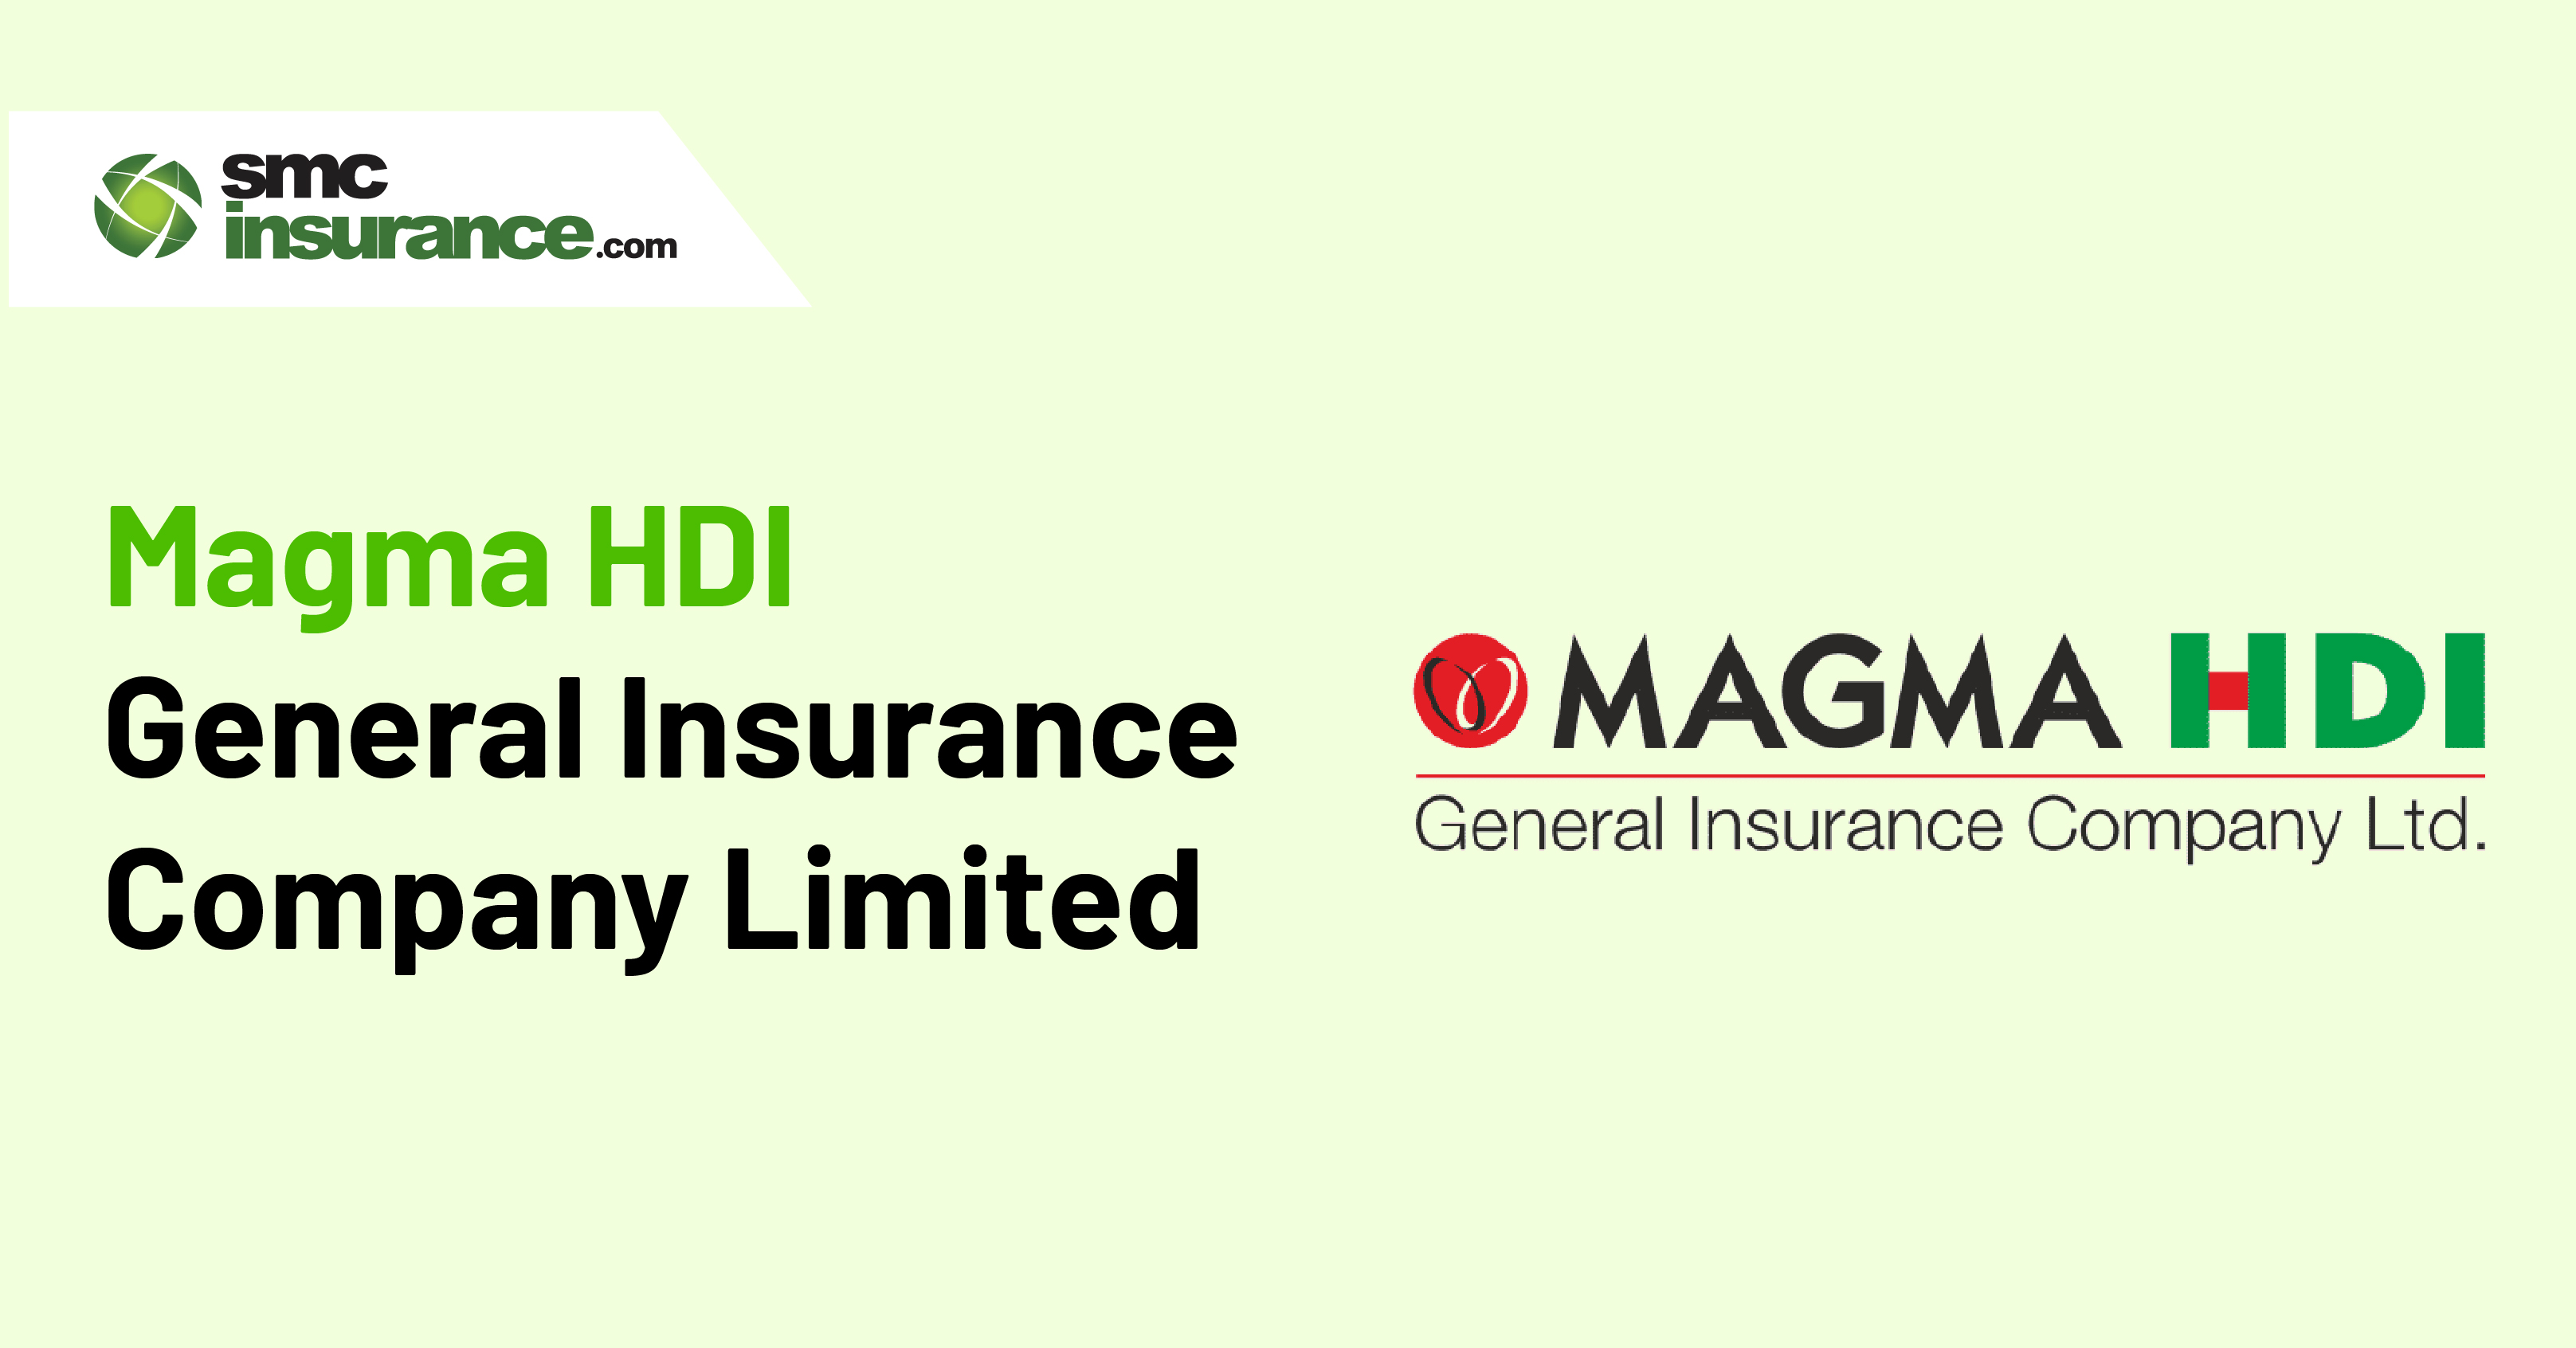 Magma HDI General Insurance Company Limited